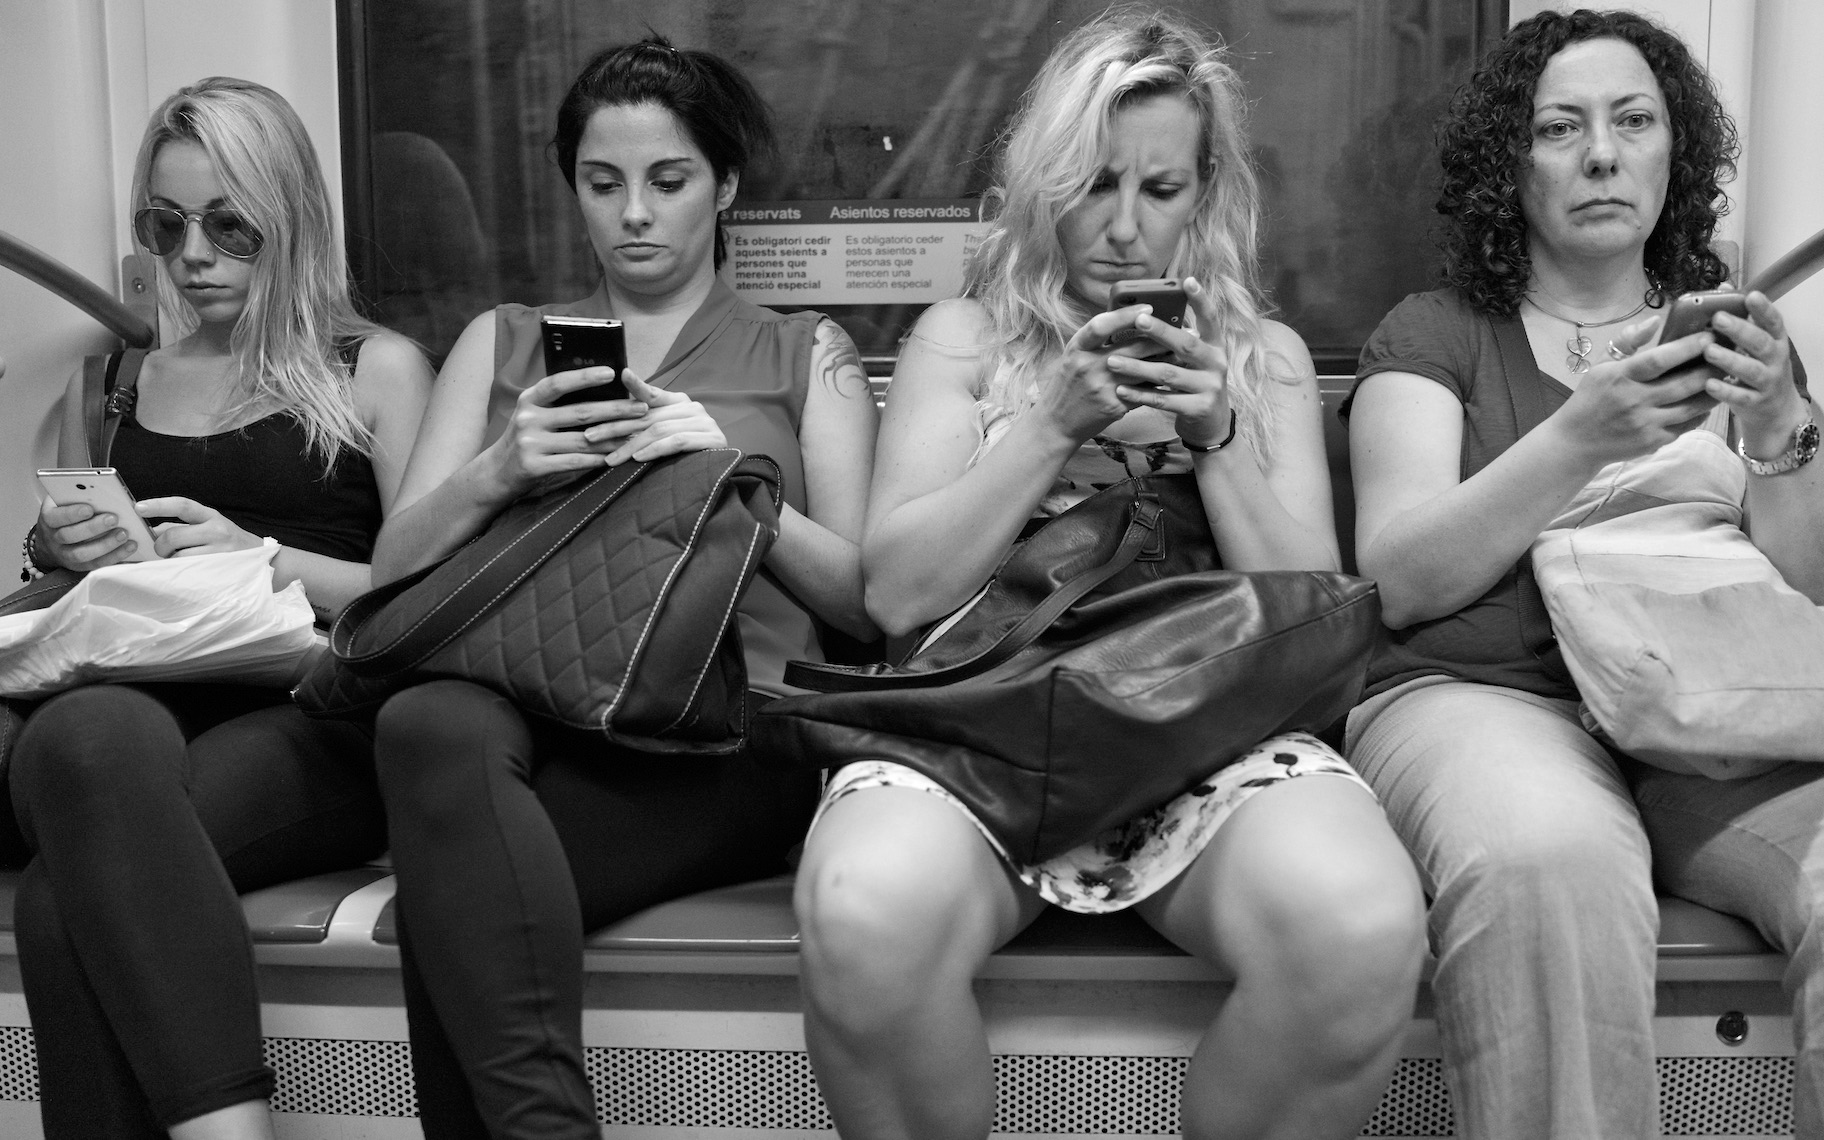 Mobile Phone Users, Barcelona Metro